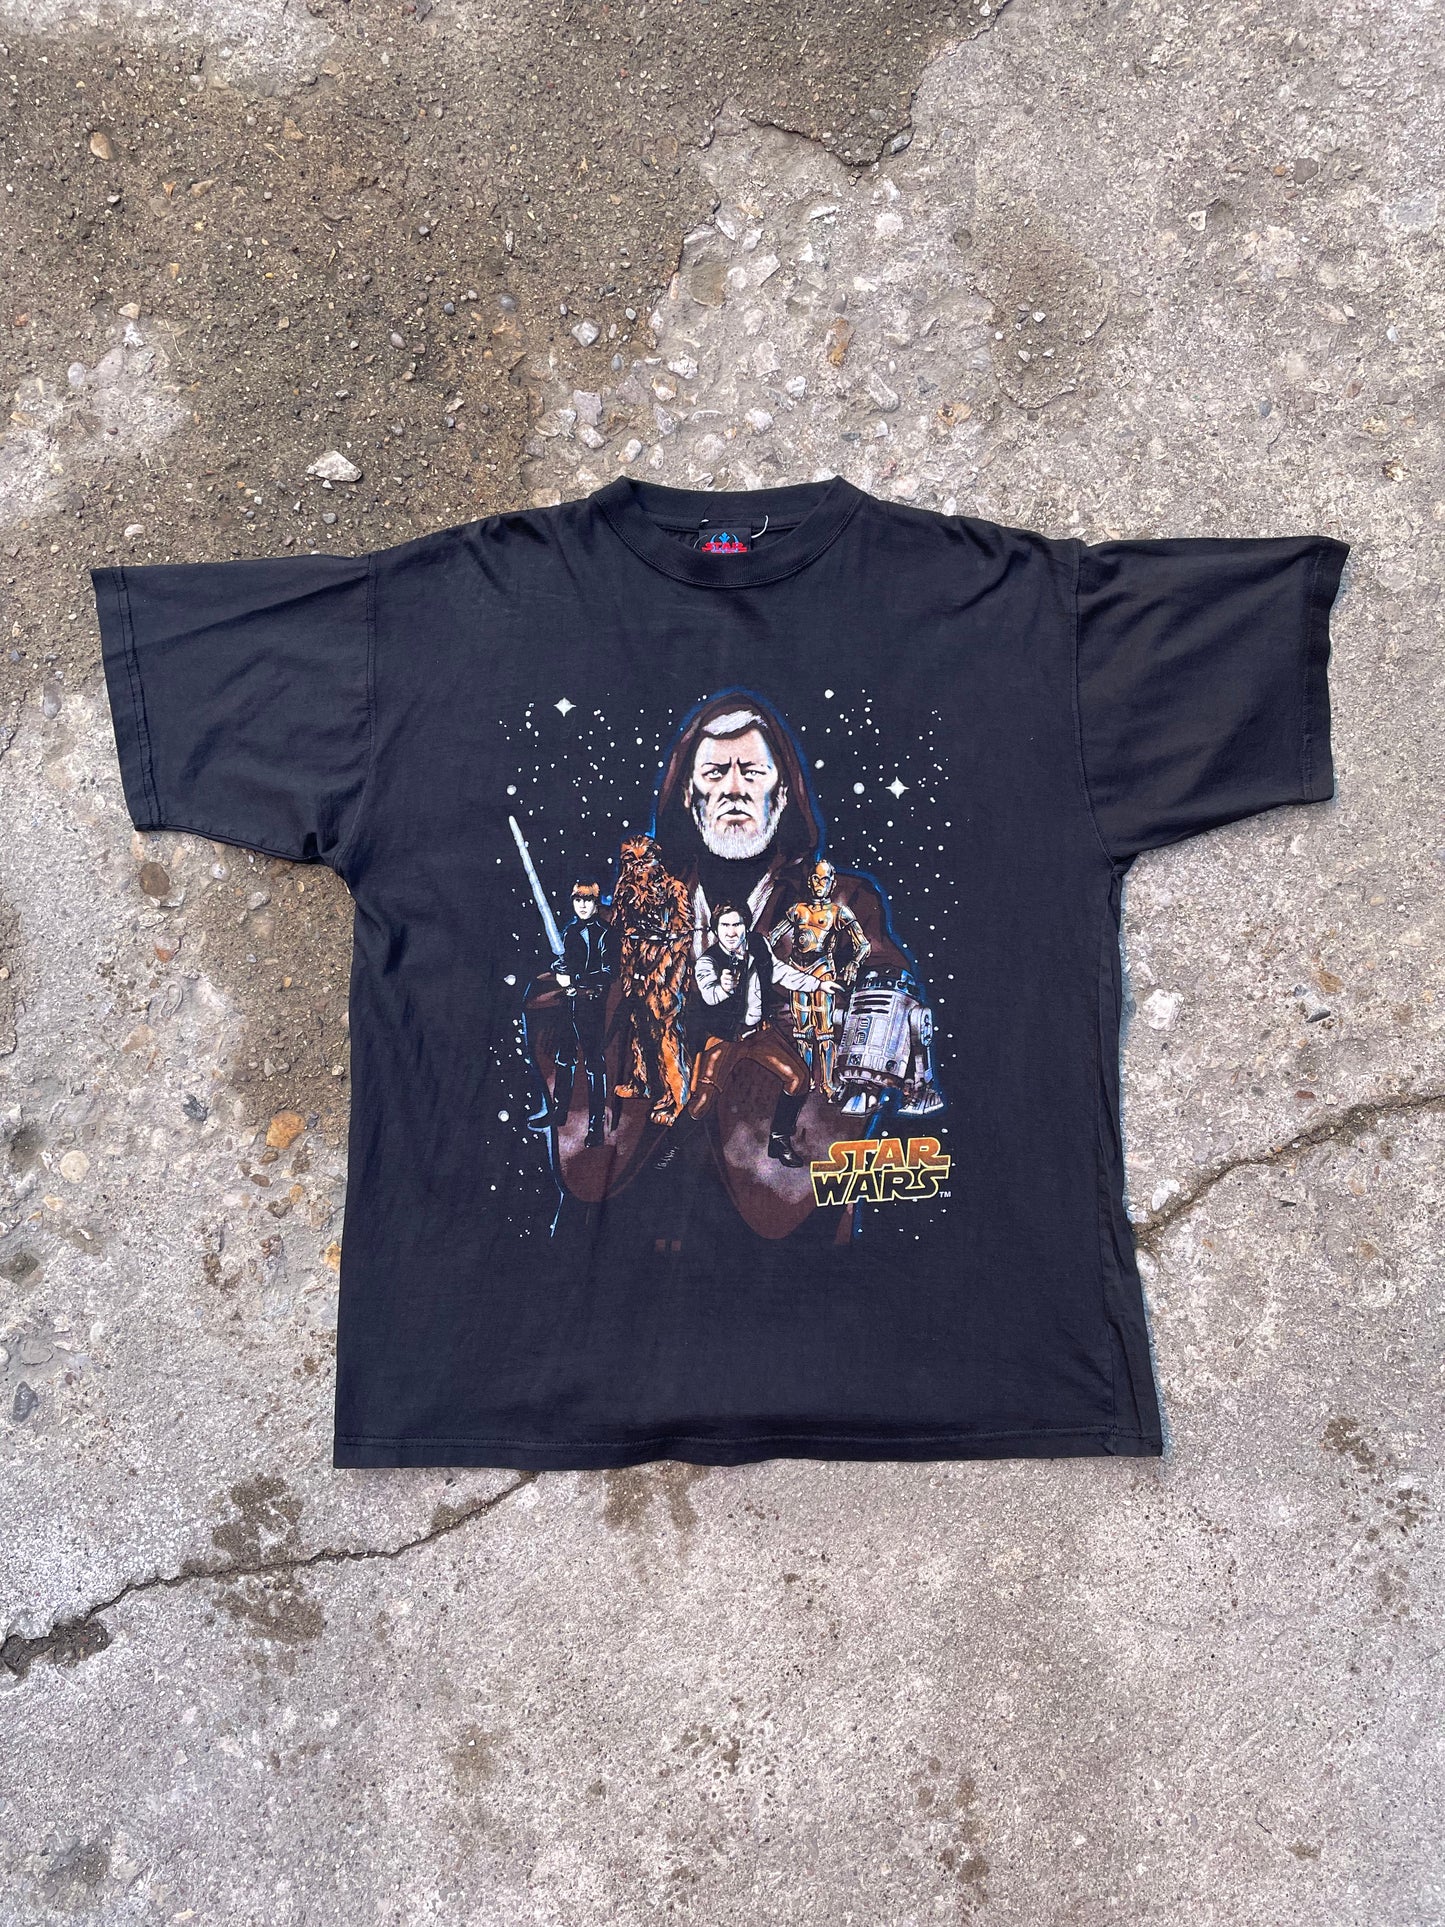 1997 Star Wars A New Hope Movie T-Shirt - XL